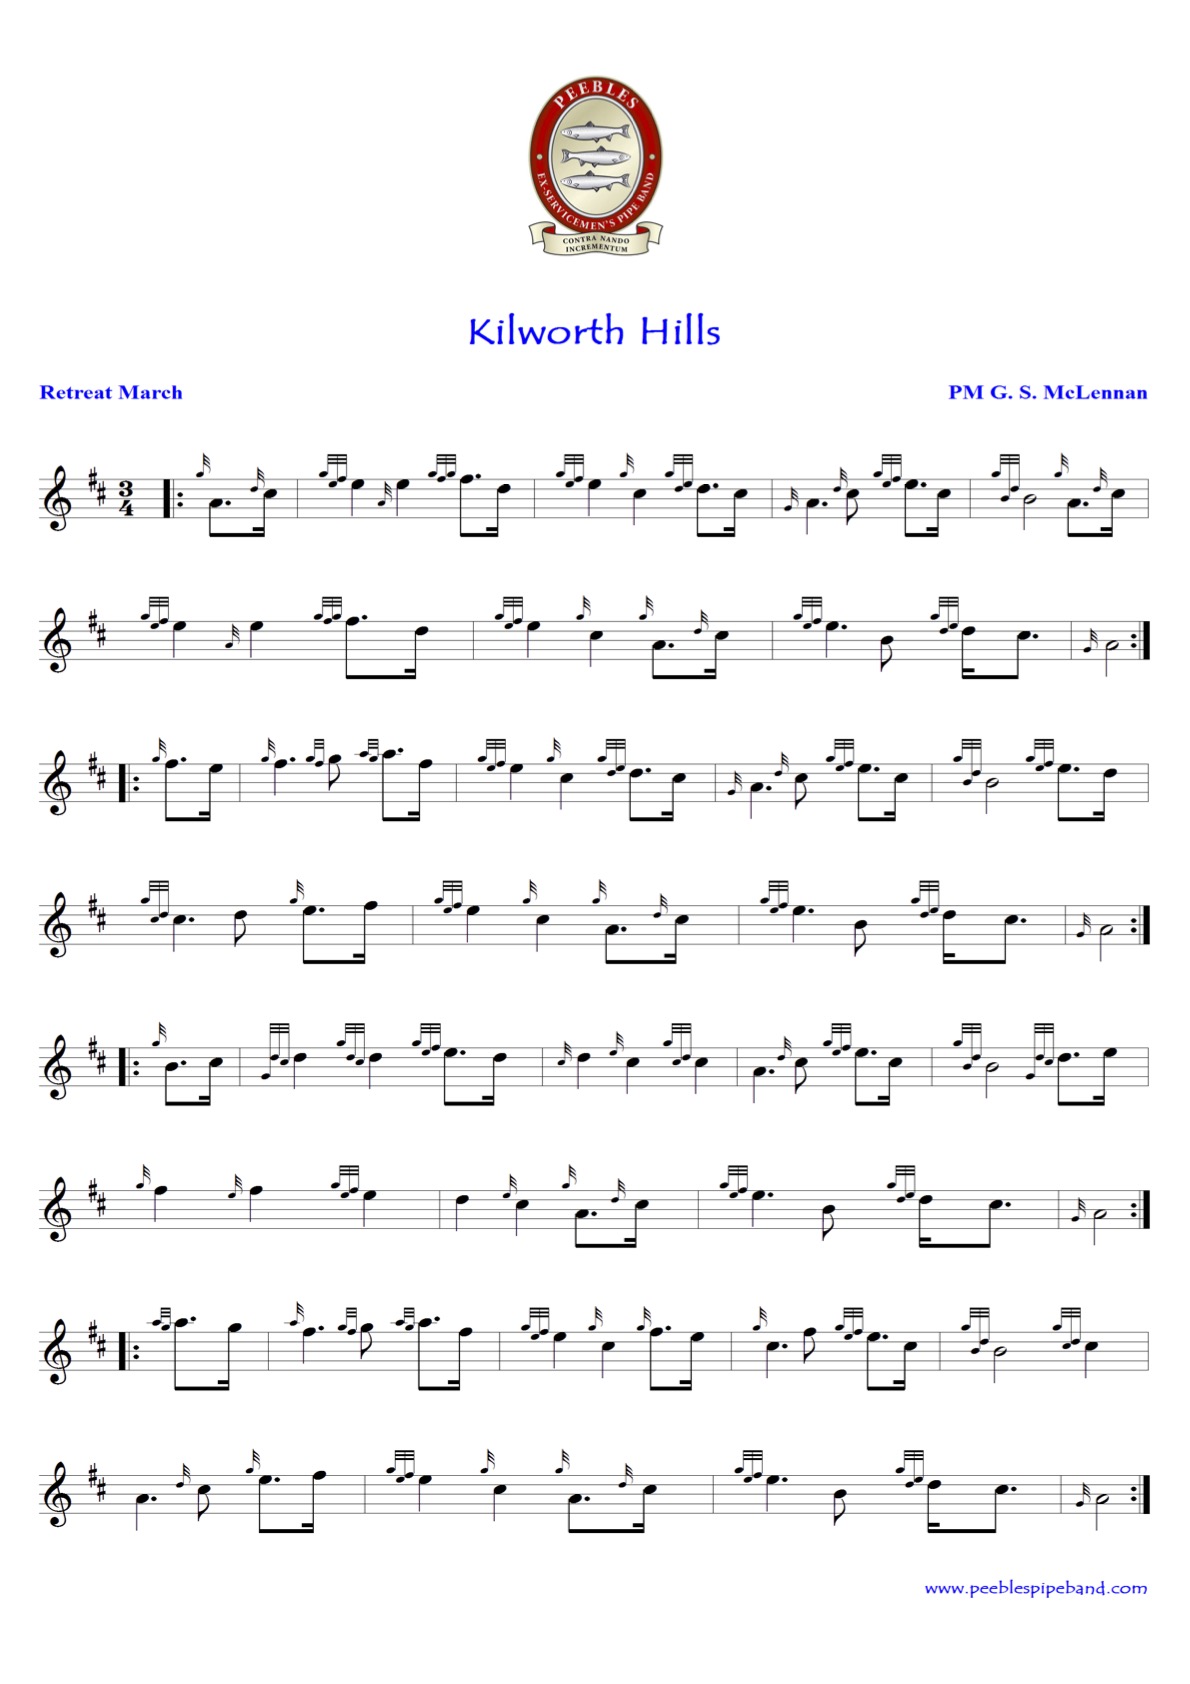 Kilworth Hills